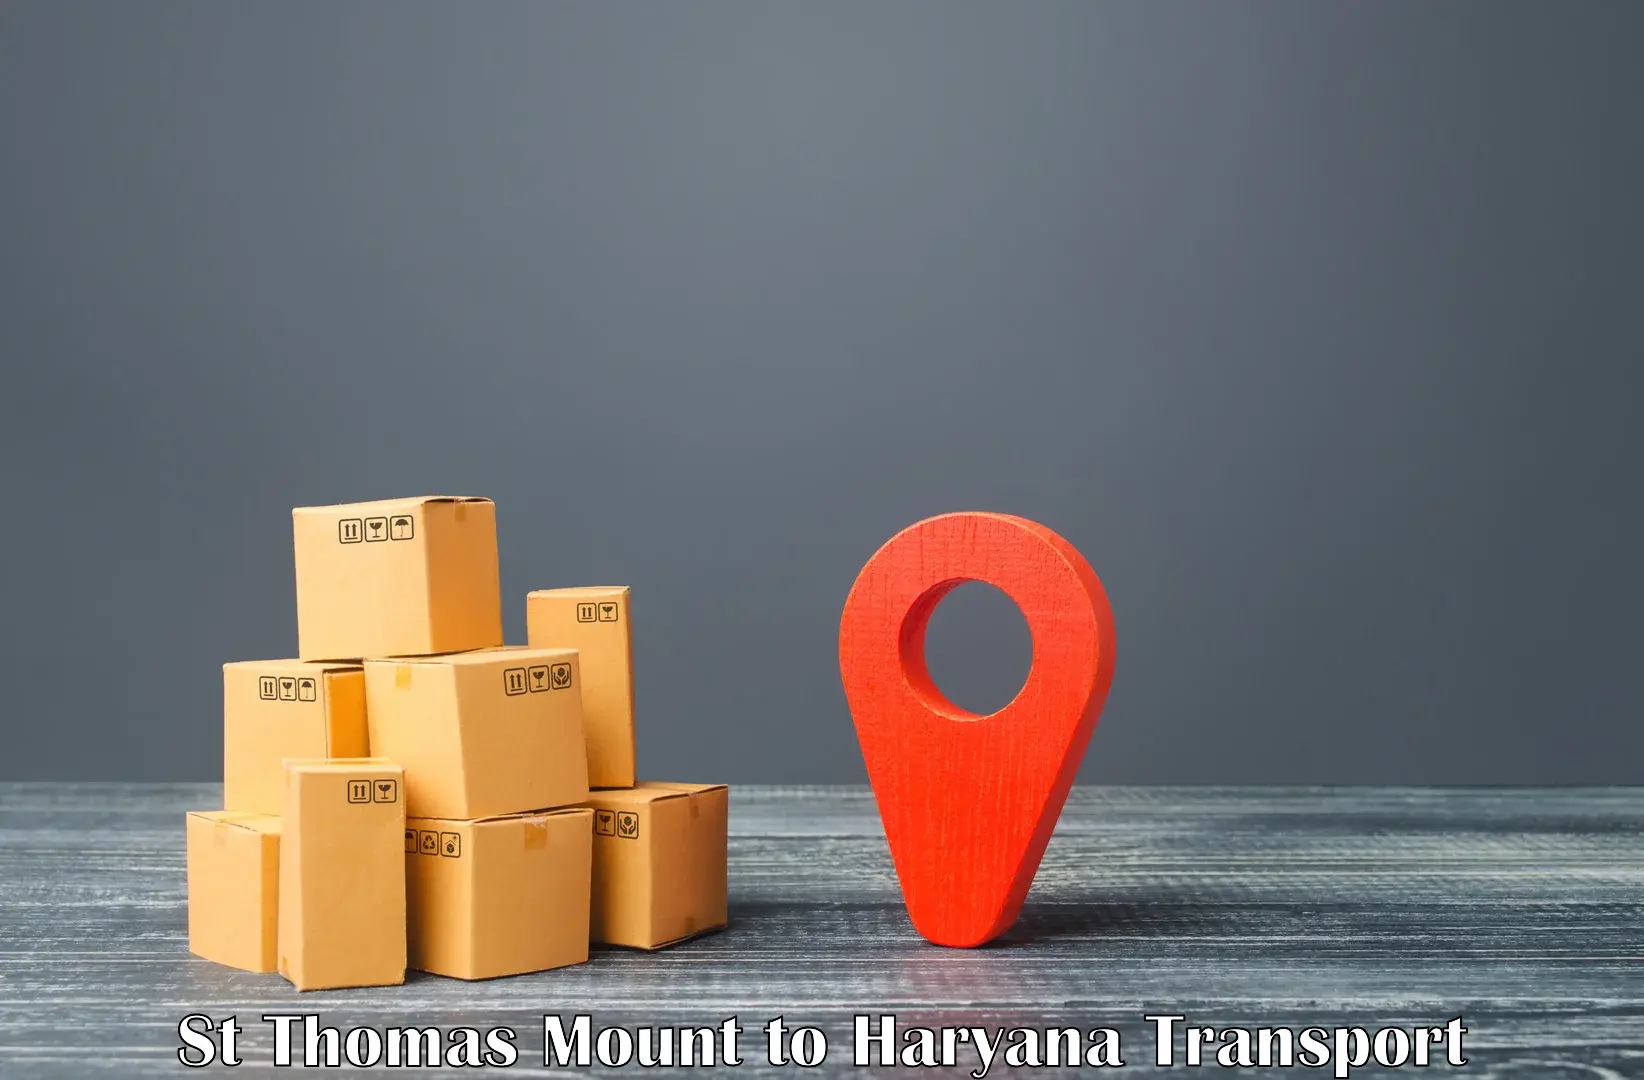 Online transport service St Thomas Mount to Narwana